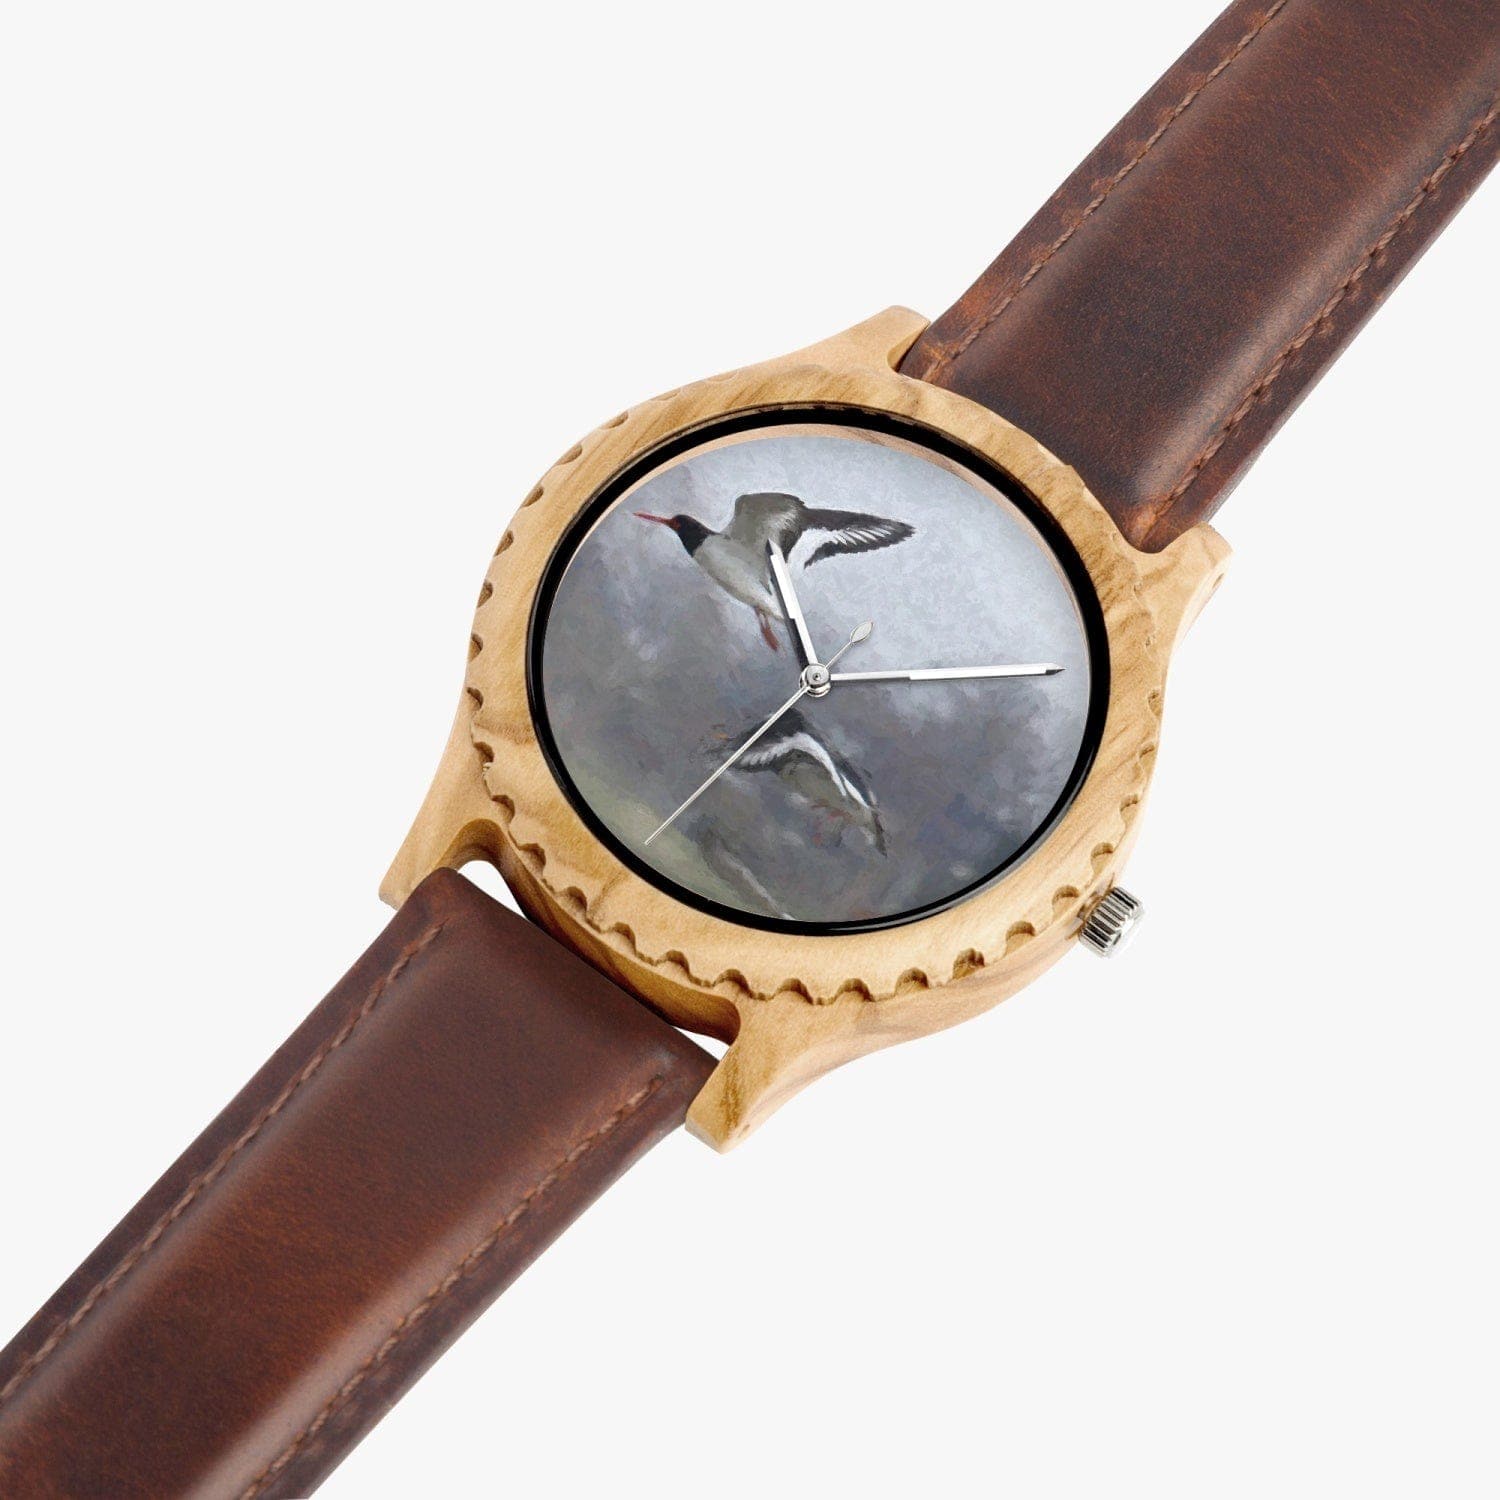 Time Flies.  Italian Olive Lumber Wooden Watch - Leather Strap. Designer watch by Sensus Studio Design